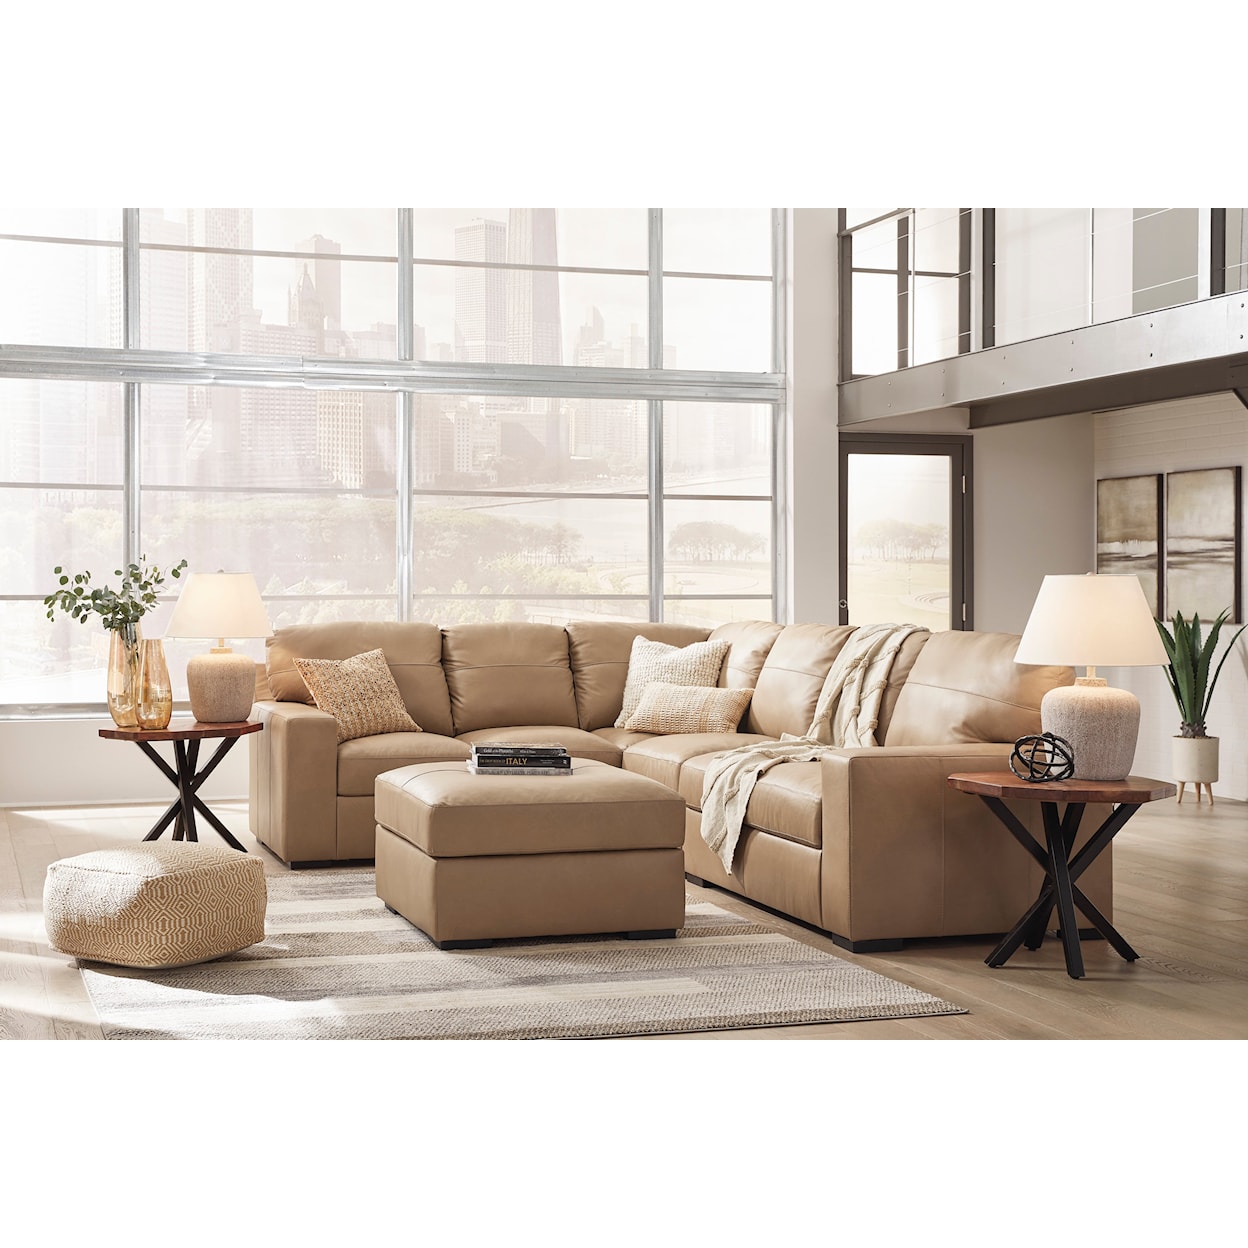 StyleLine Bandon Living Room Set